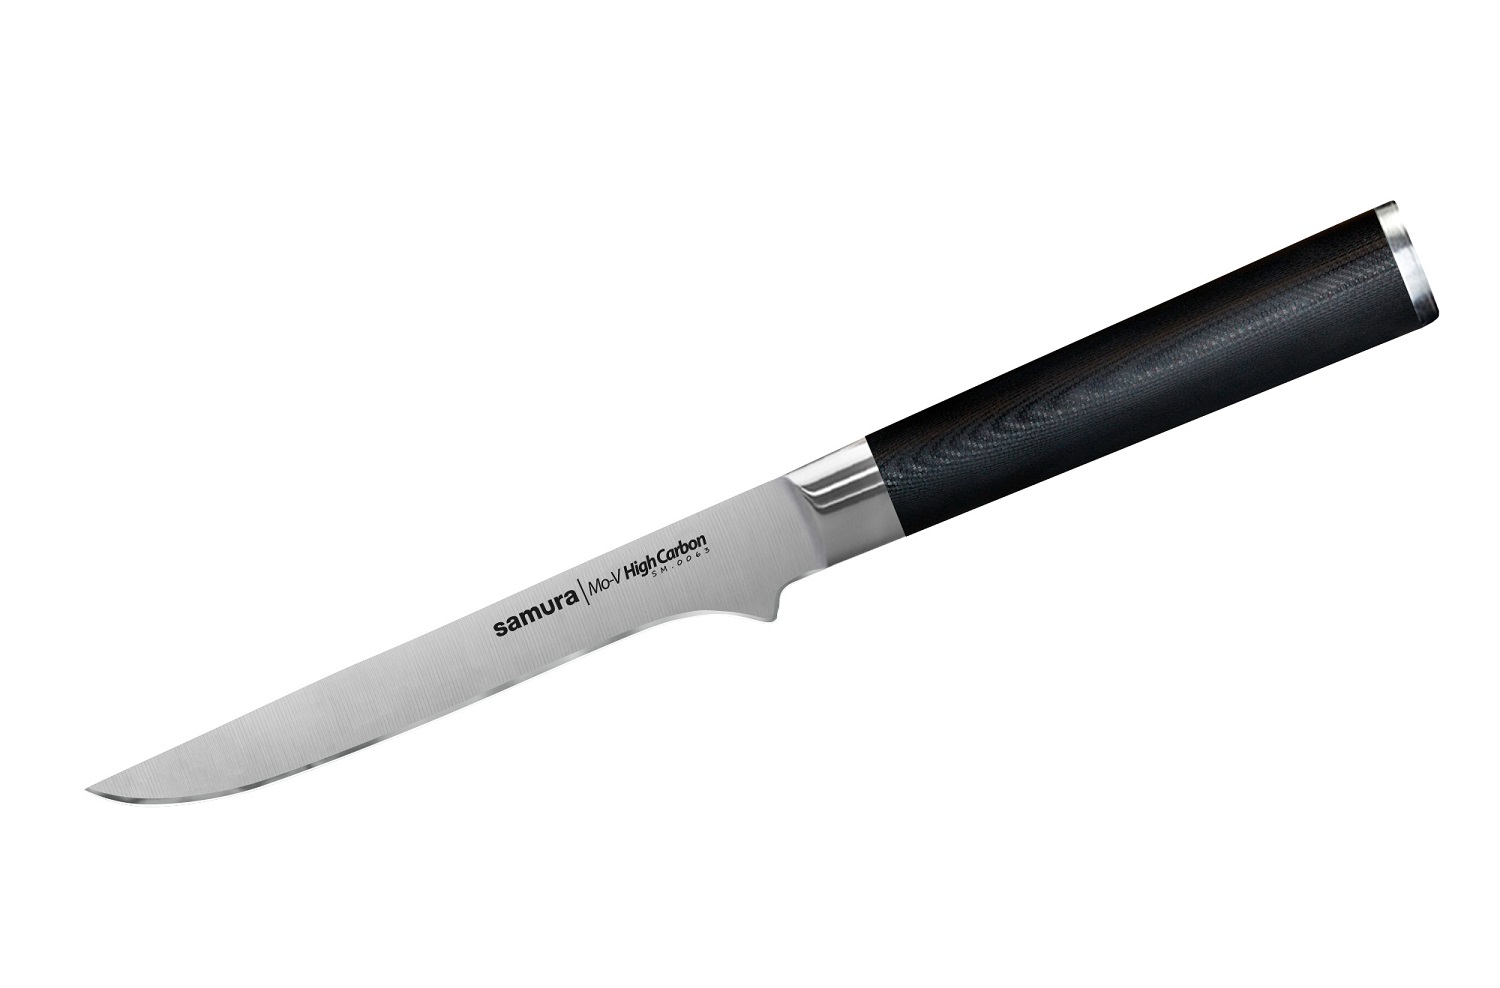 Нож Samura обвалочный Mo-V, 16,5 см, G-10 нож накири mo v 16 7 см sm 0043 k samura